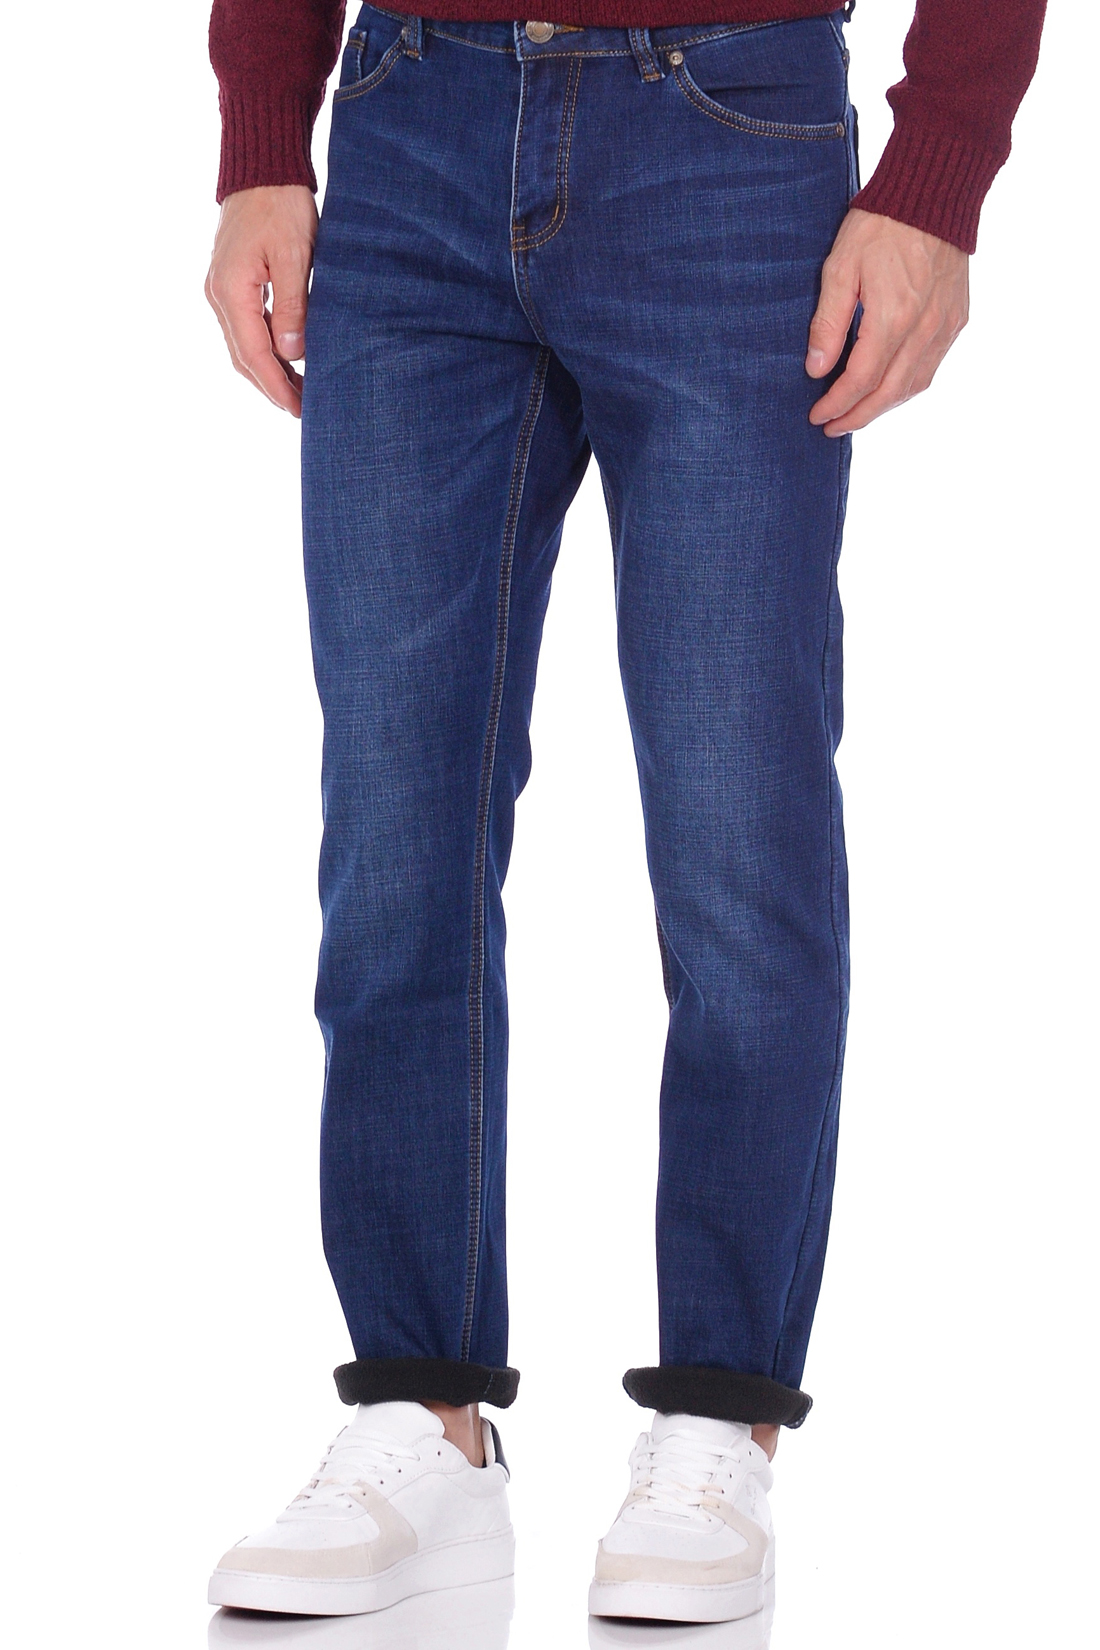 Утеплённые джинсы с заклёпками (арт. baon B809503), размер 30, цвет dark blue denim#синий Утеплённые джинсы с заклёпками (арт. baon B809503) - фото 1